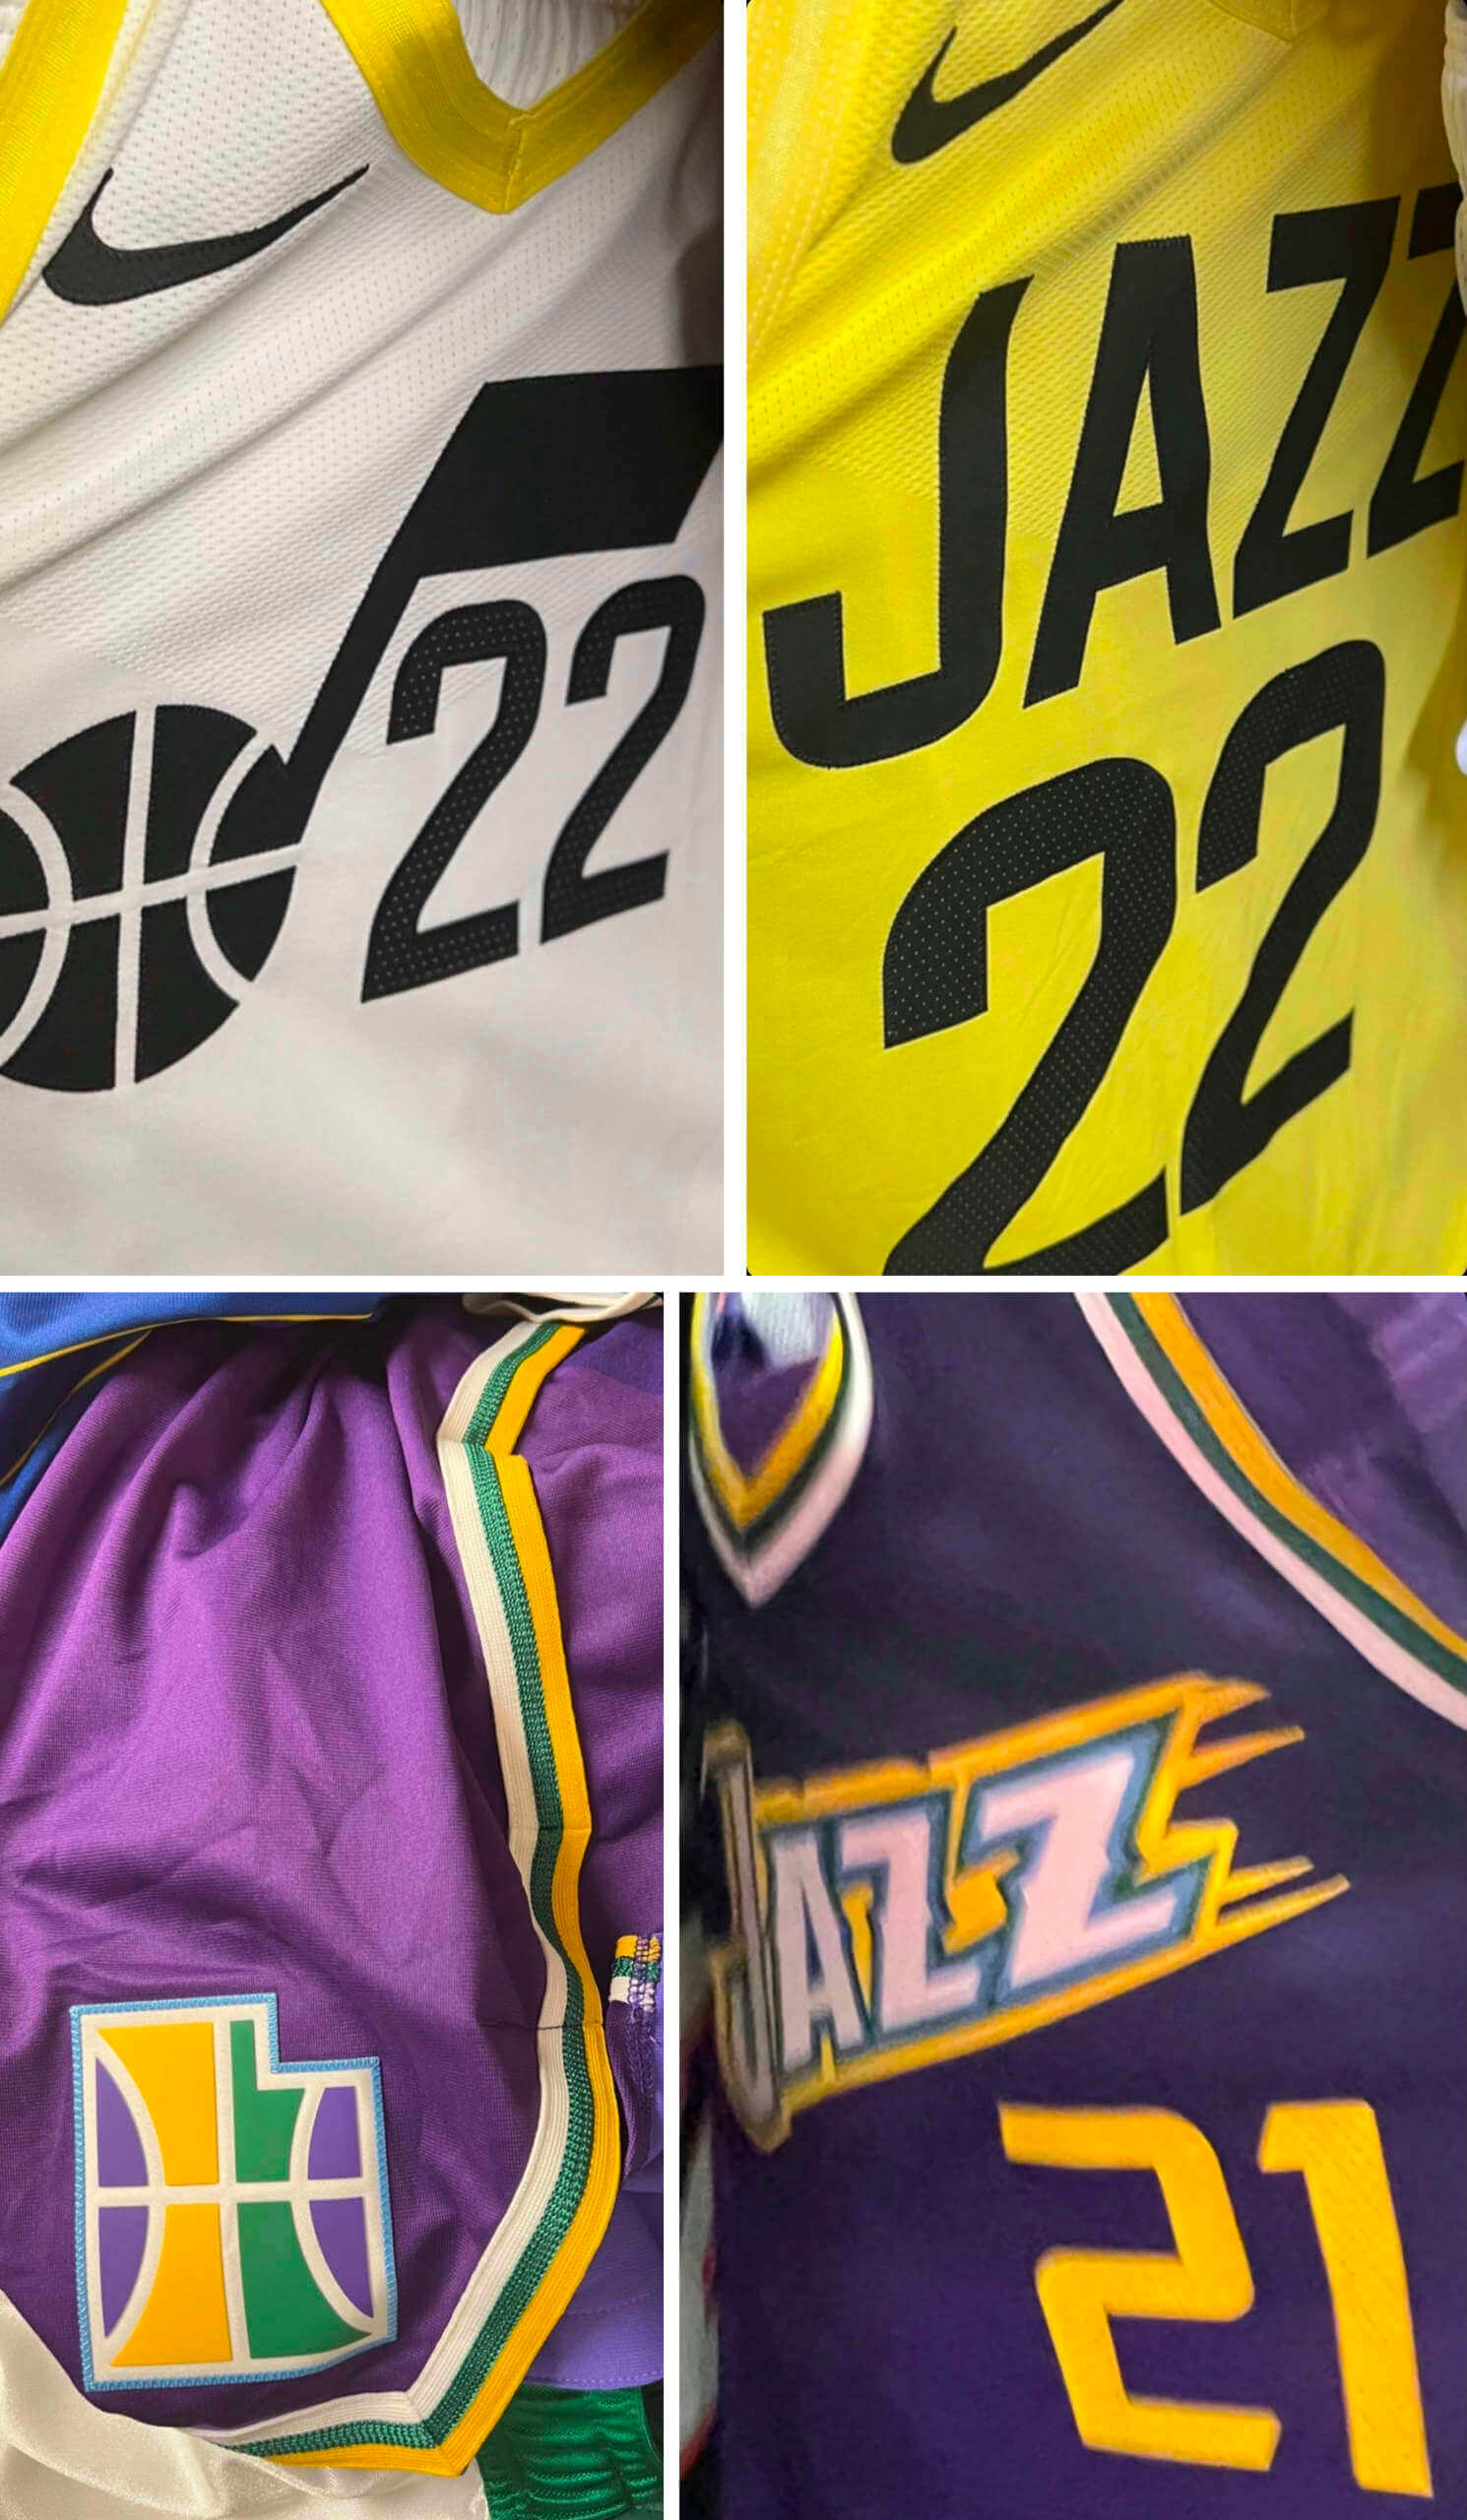 My take at an Utah Jazz rebrand. Bringing back purple and the